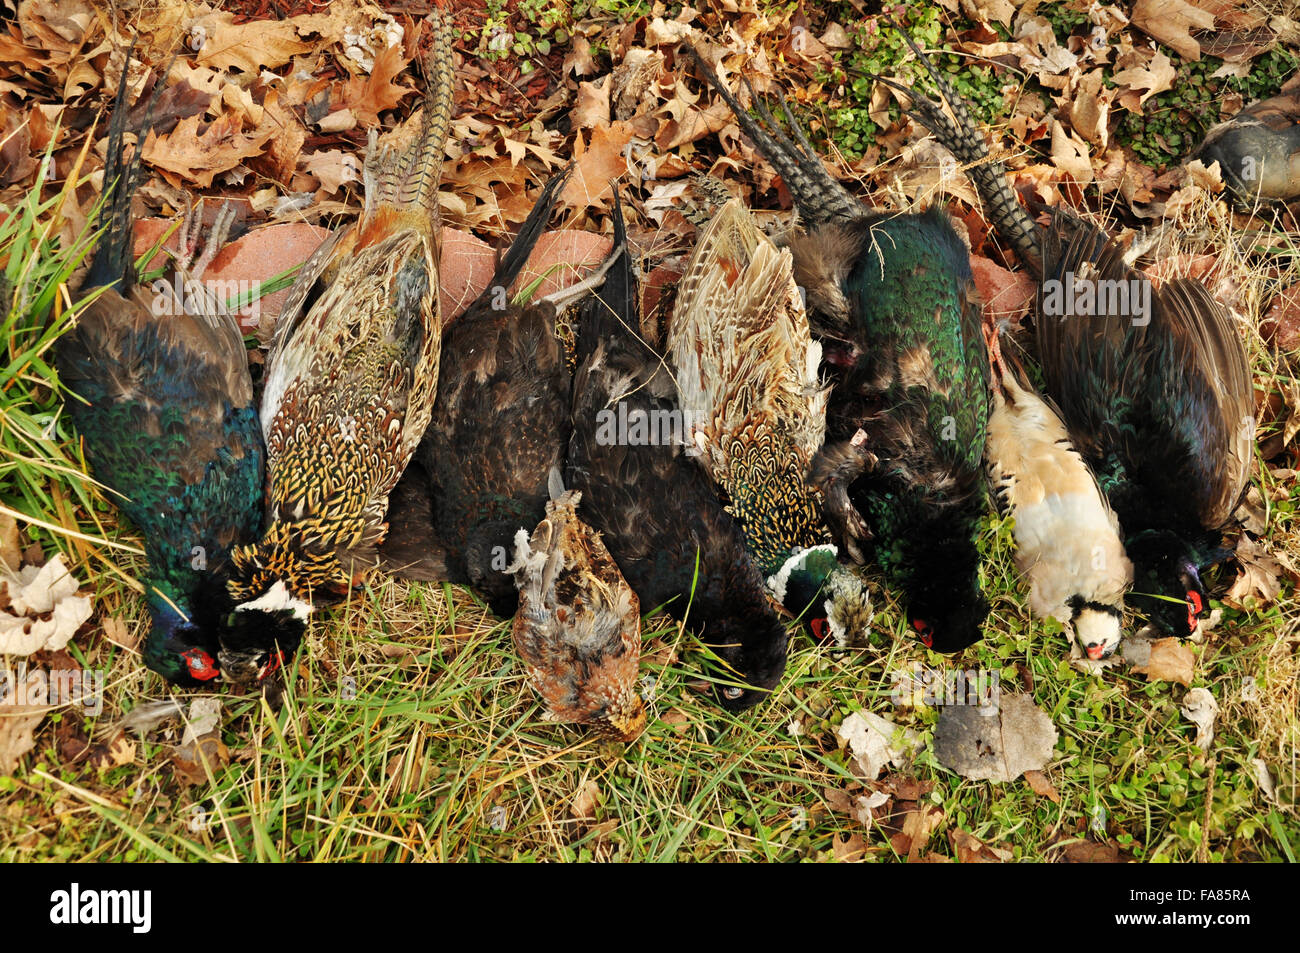 Pheasant, Quail, Chukar birds displayed after a hunt Stock Photo